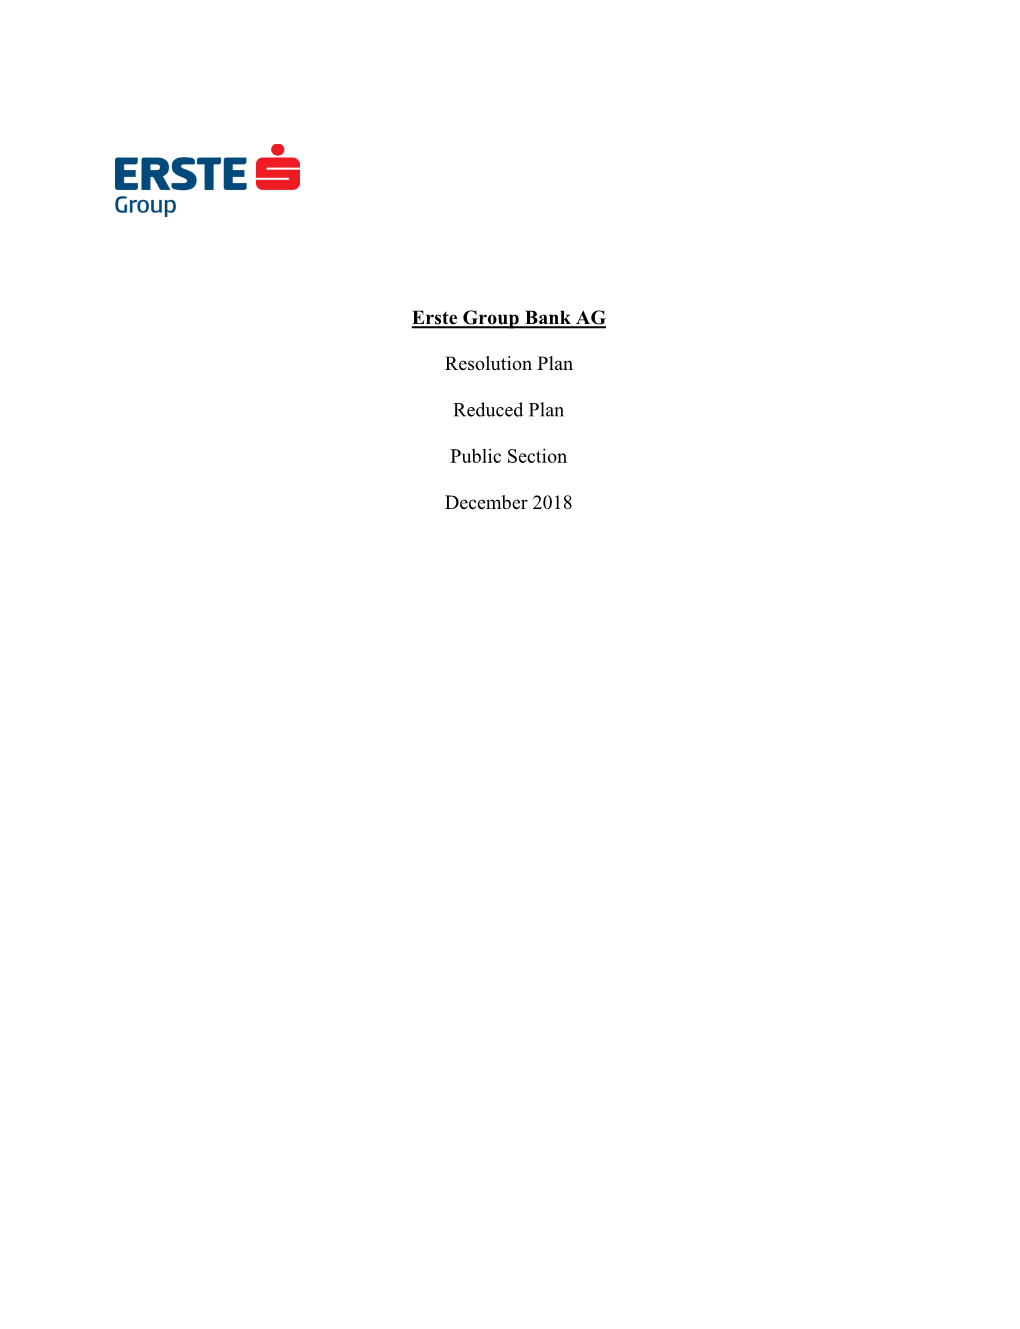 Erste Group Bank AG Resolution Plan Reduced Plan Public Section December 2018